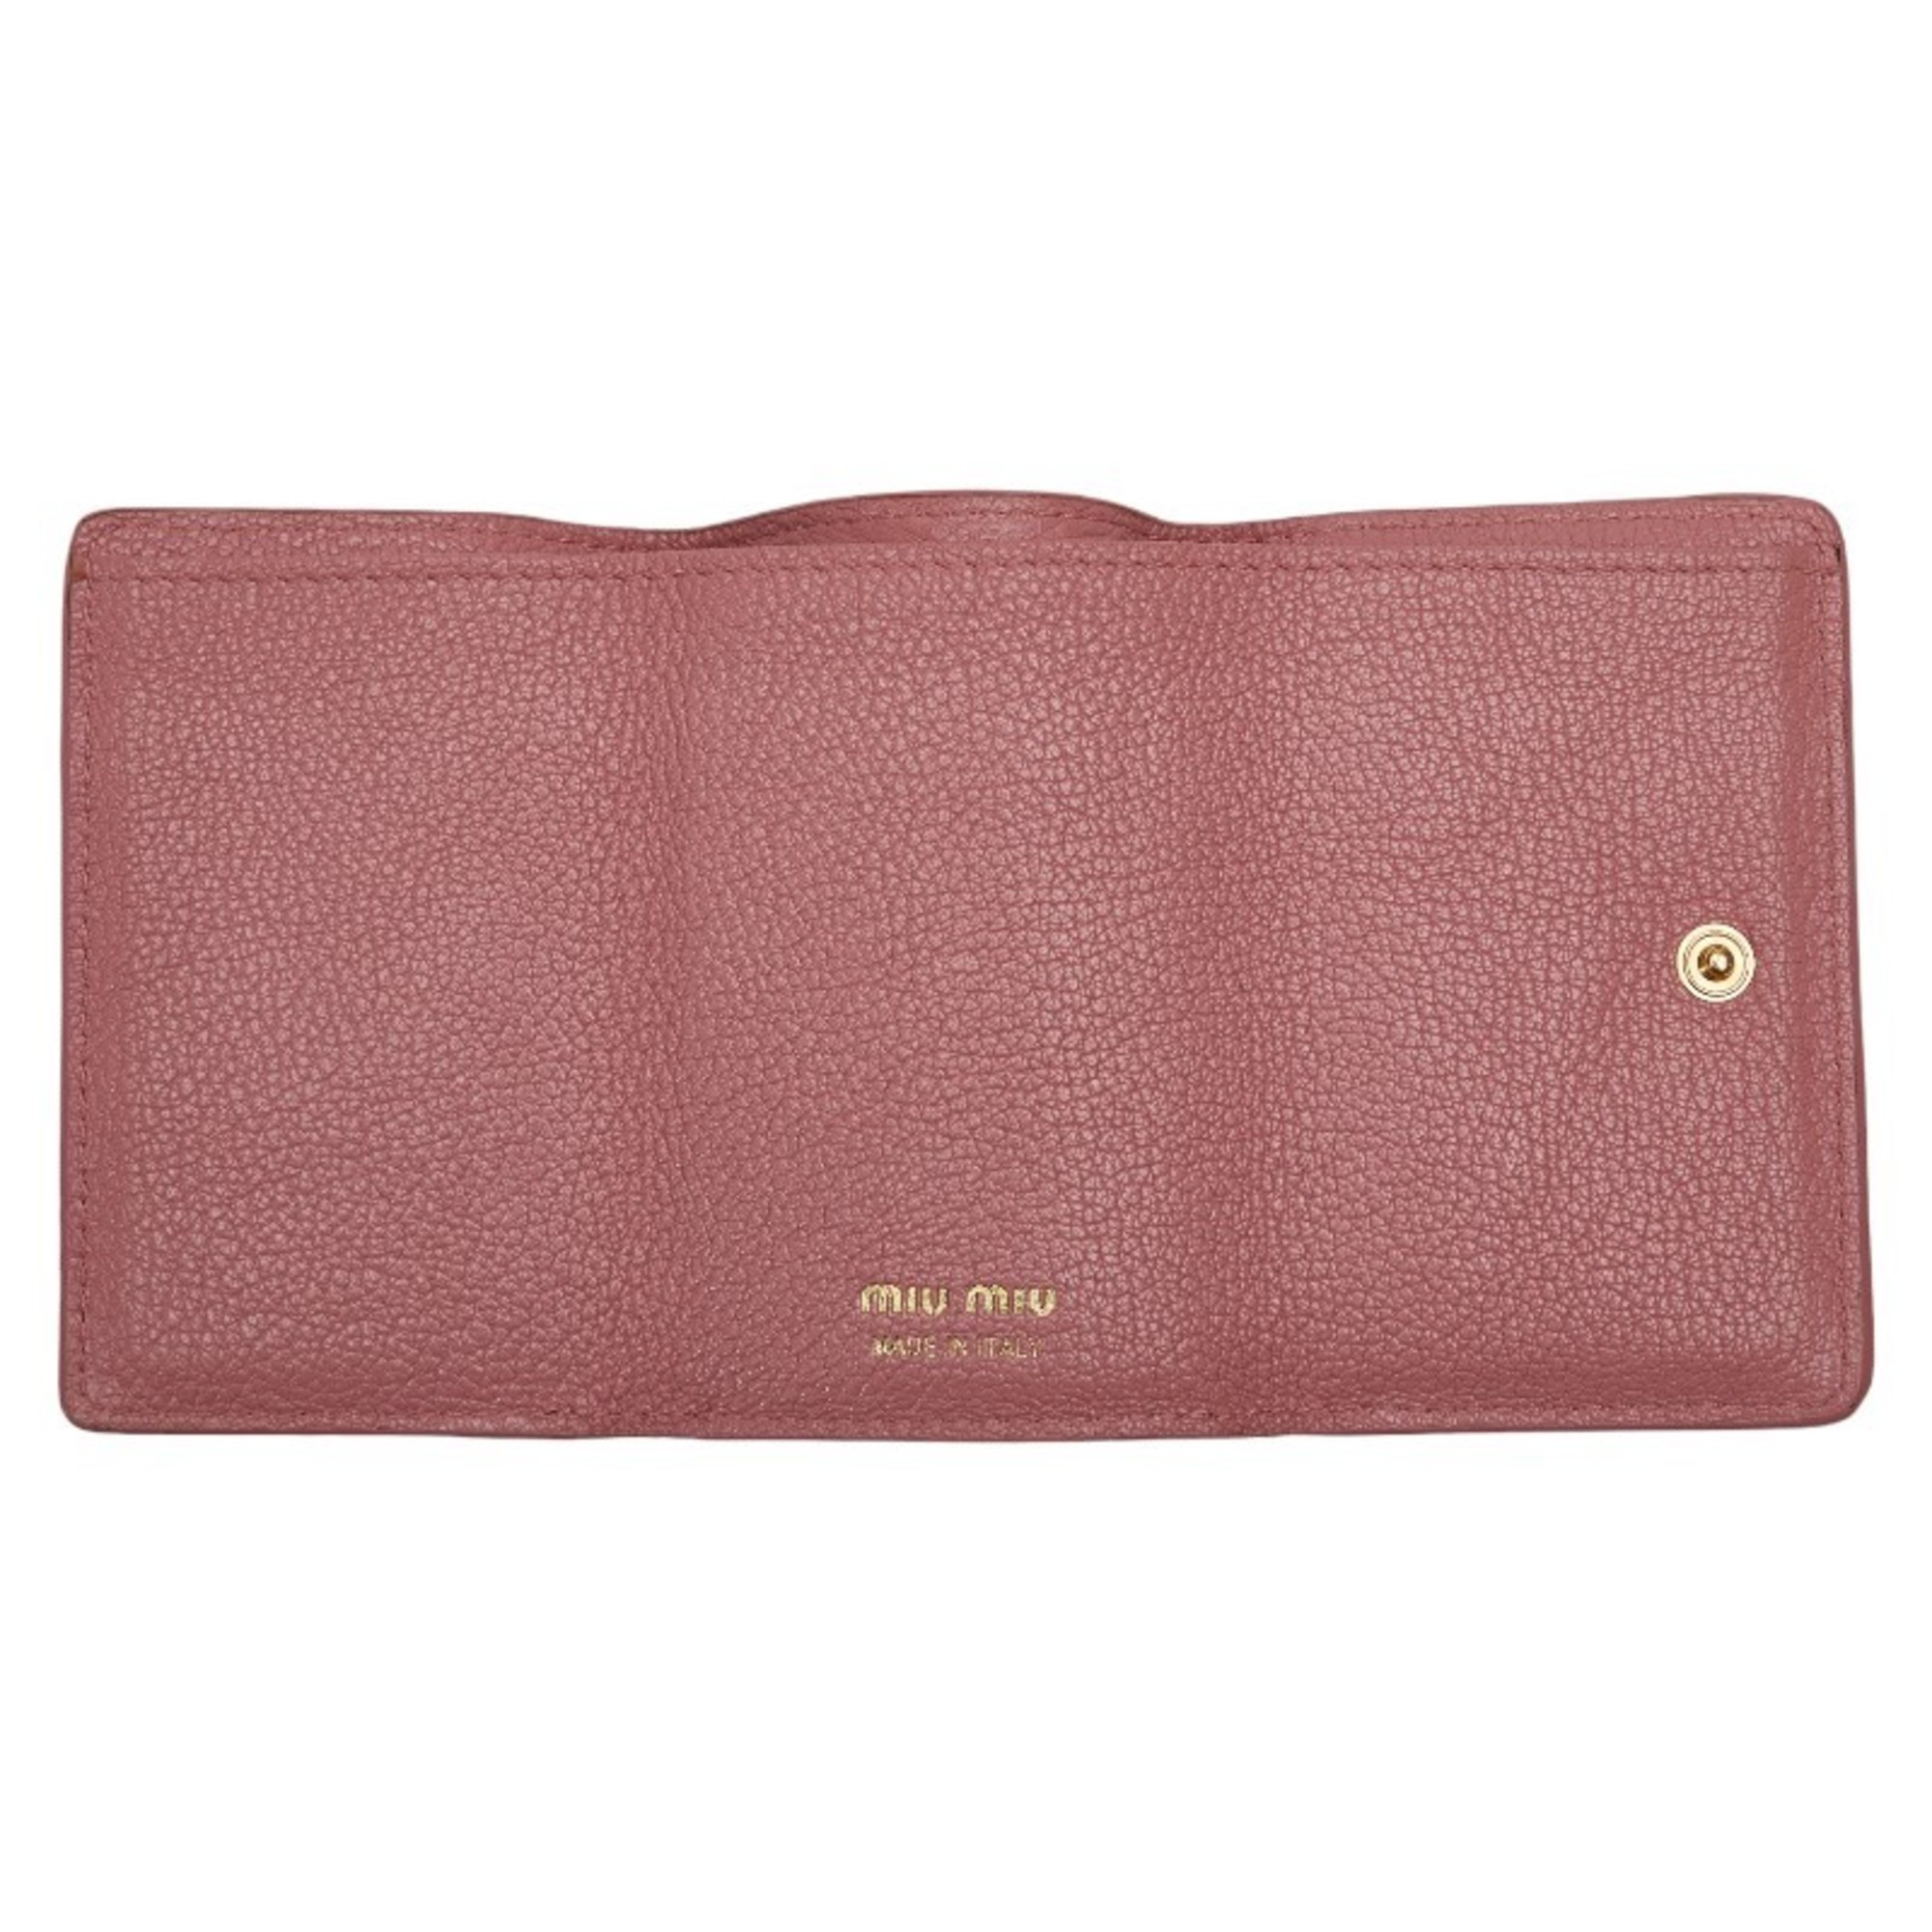 Miu Miu Miu Ribbon Motif Tri-Fold Wallet Compact Pink Leather Women's MIUMIU